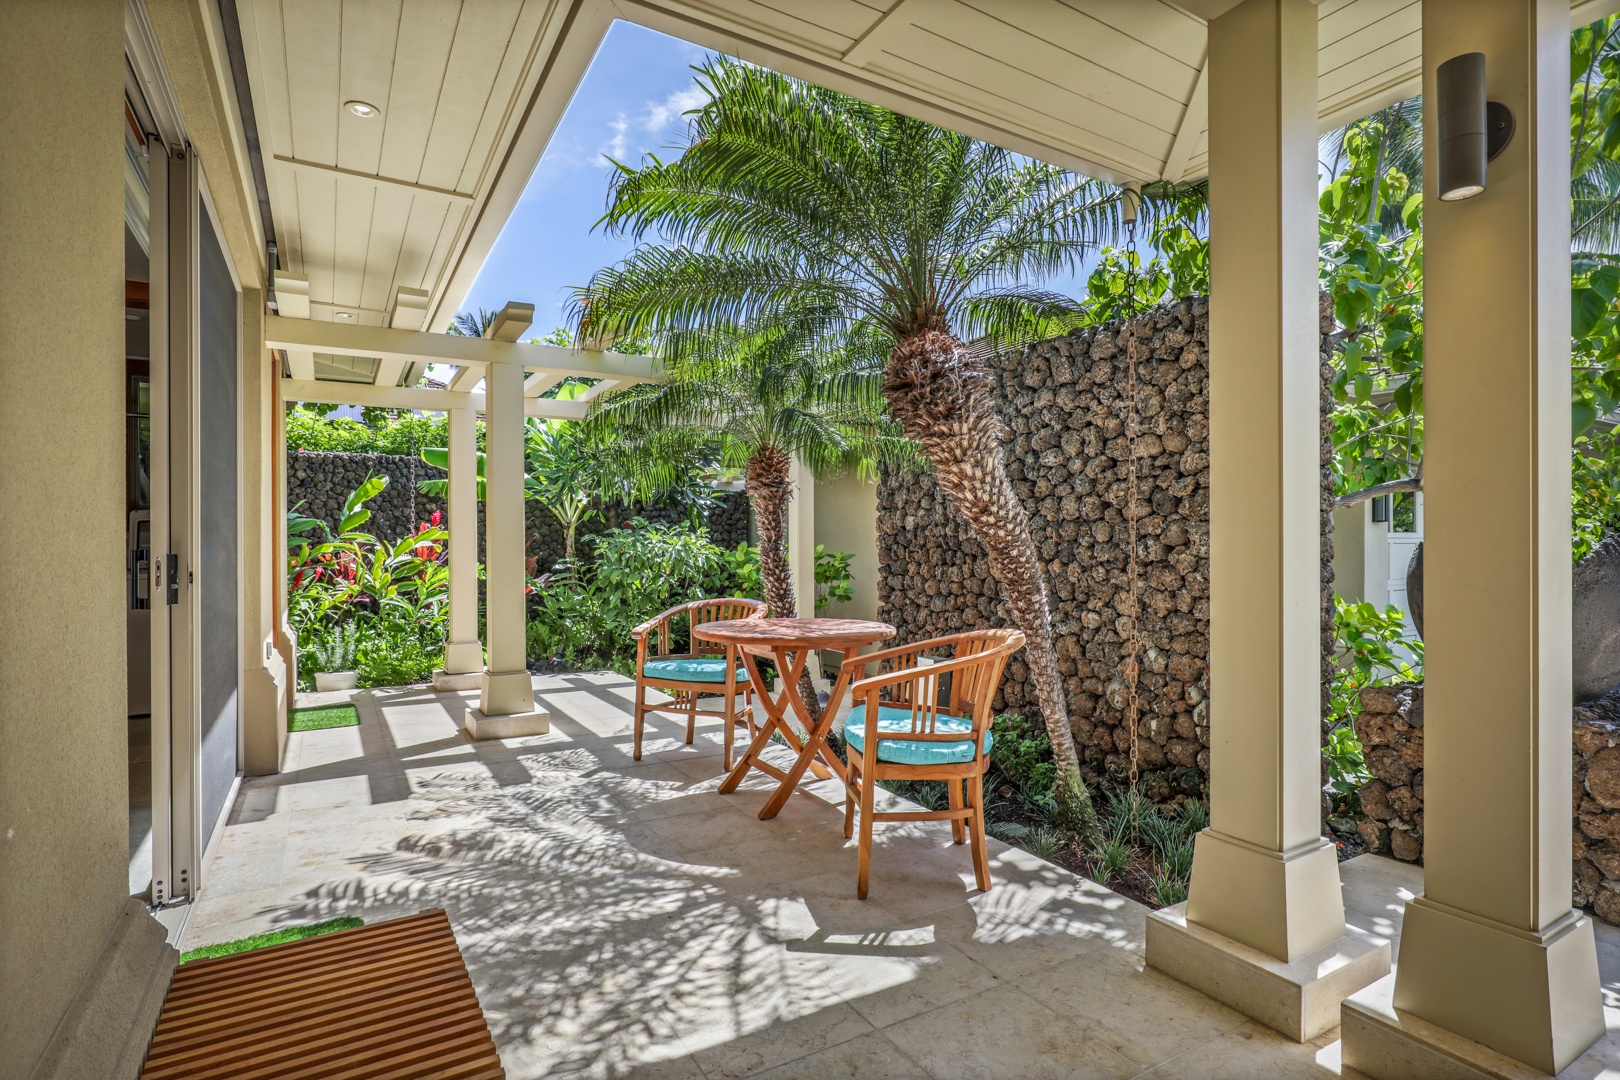 Kailua Kona Vacation Rentals, 4BD Hainoa Estate (122) at Four Seasons Resort at Hualalai - Exterior kitchen cafe table seating surrounded by tropical foliage.